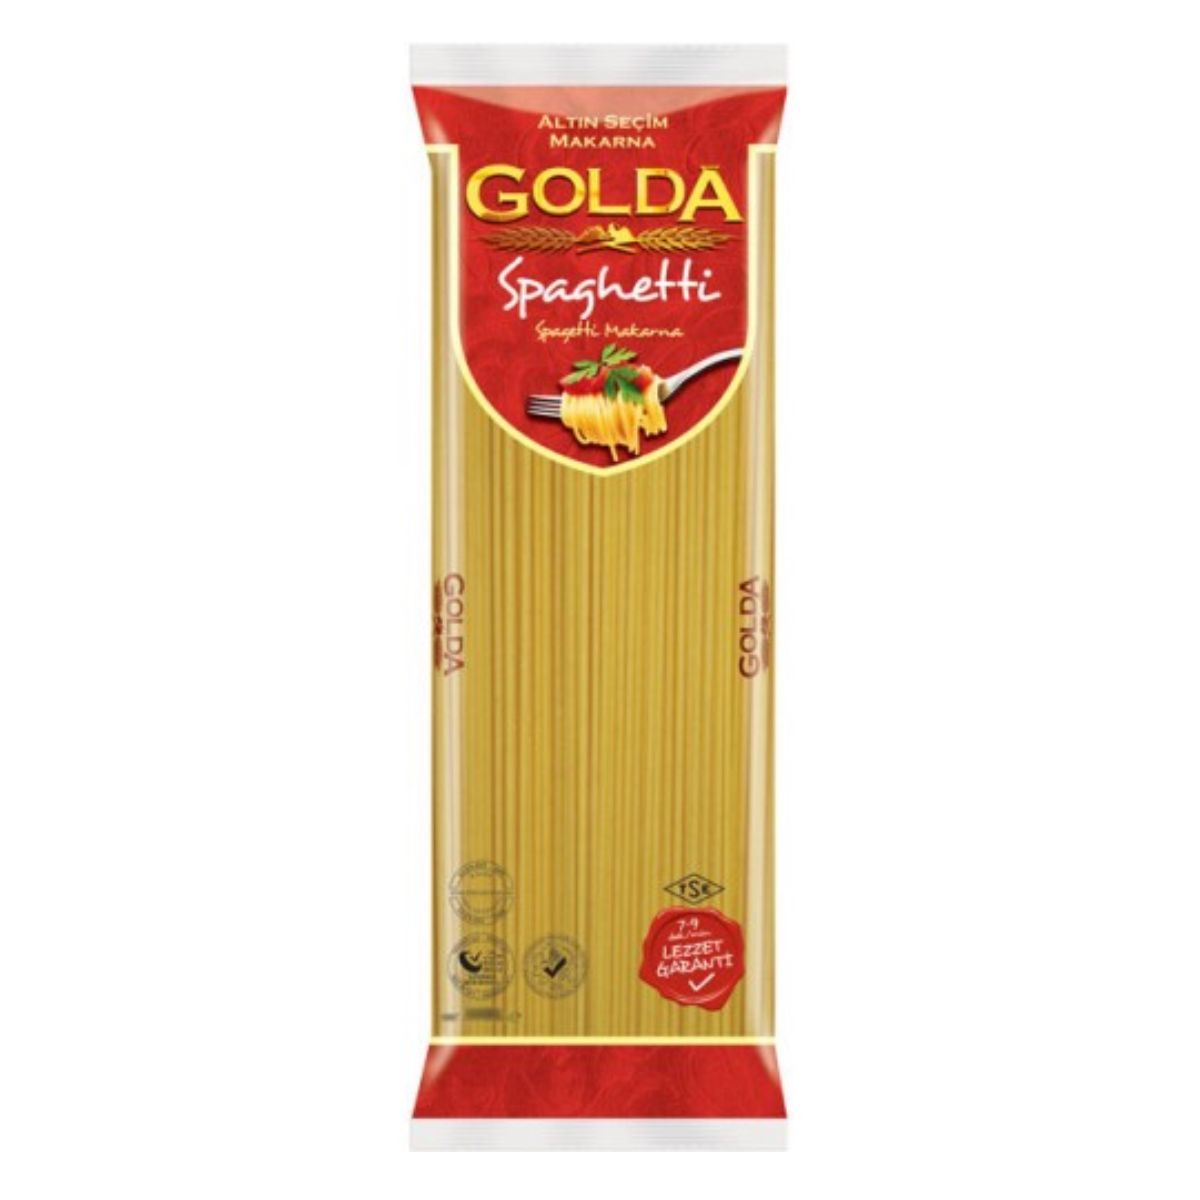 Golda - Spaghetti - 400g spaghetti in a package on a white background.